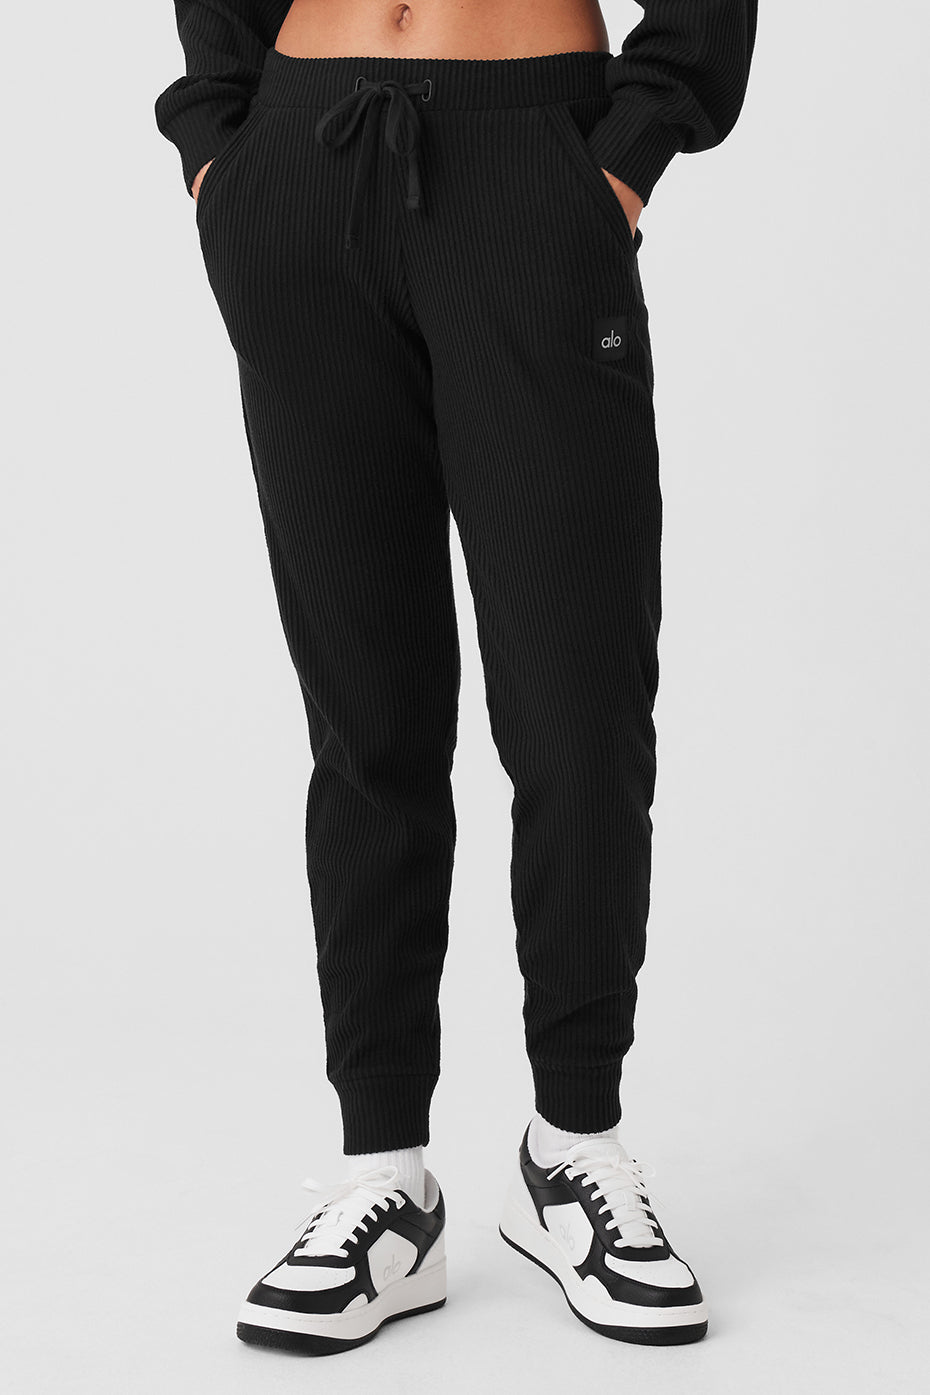 Nike Women's Tech Fleece Capri Culottes Shorts Heather Gray and Black XL